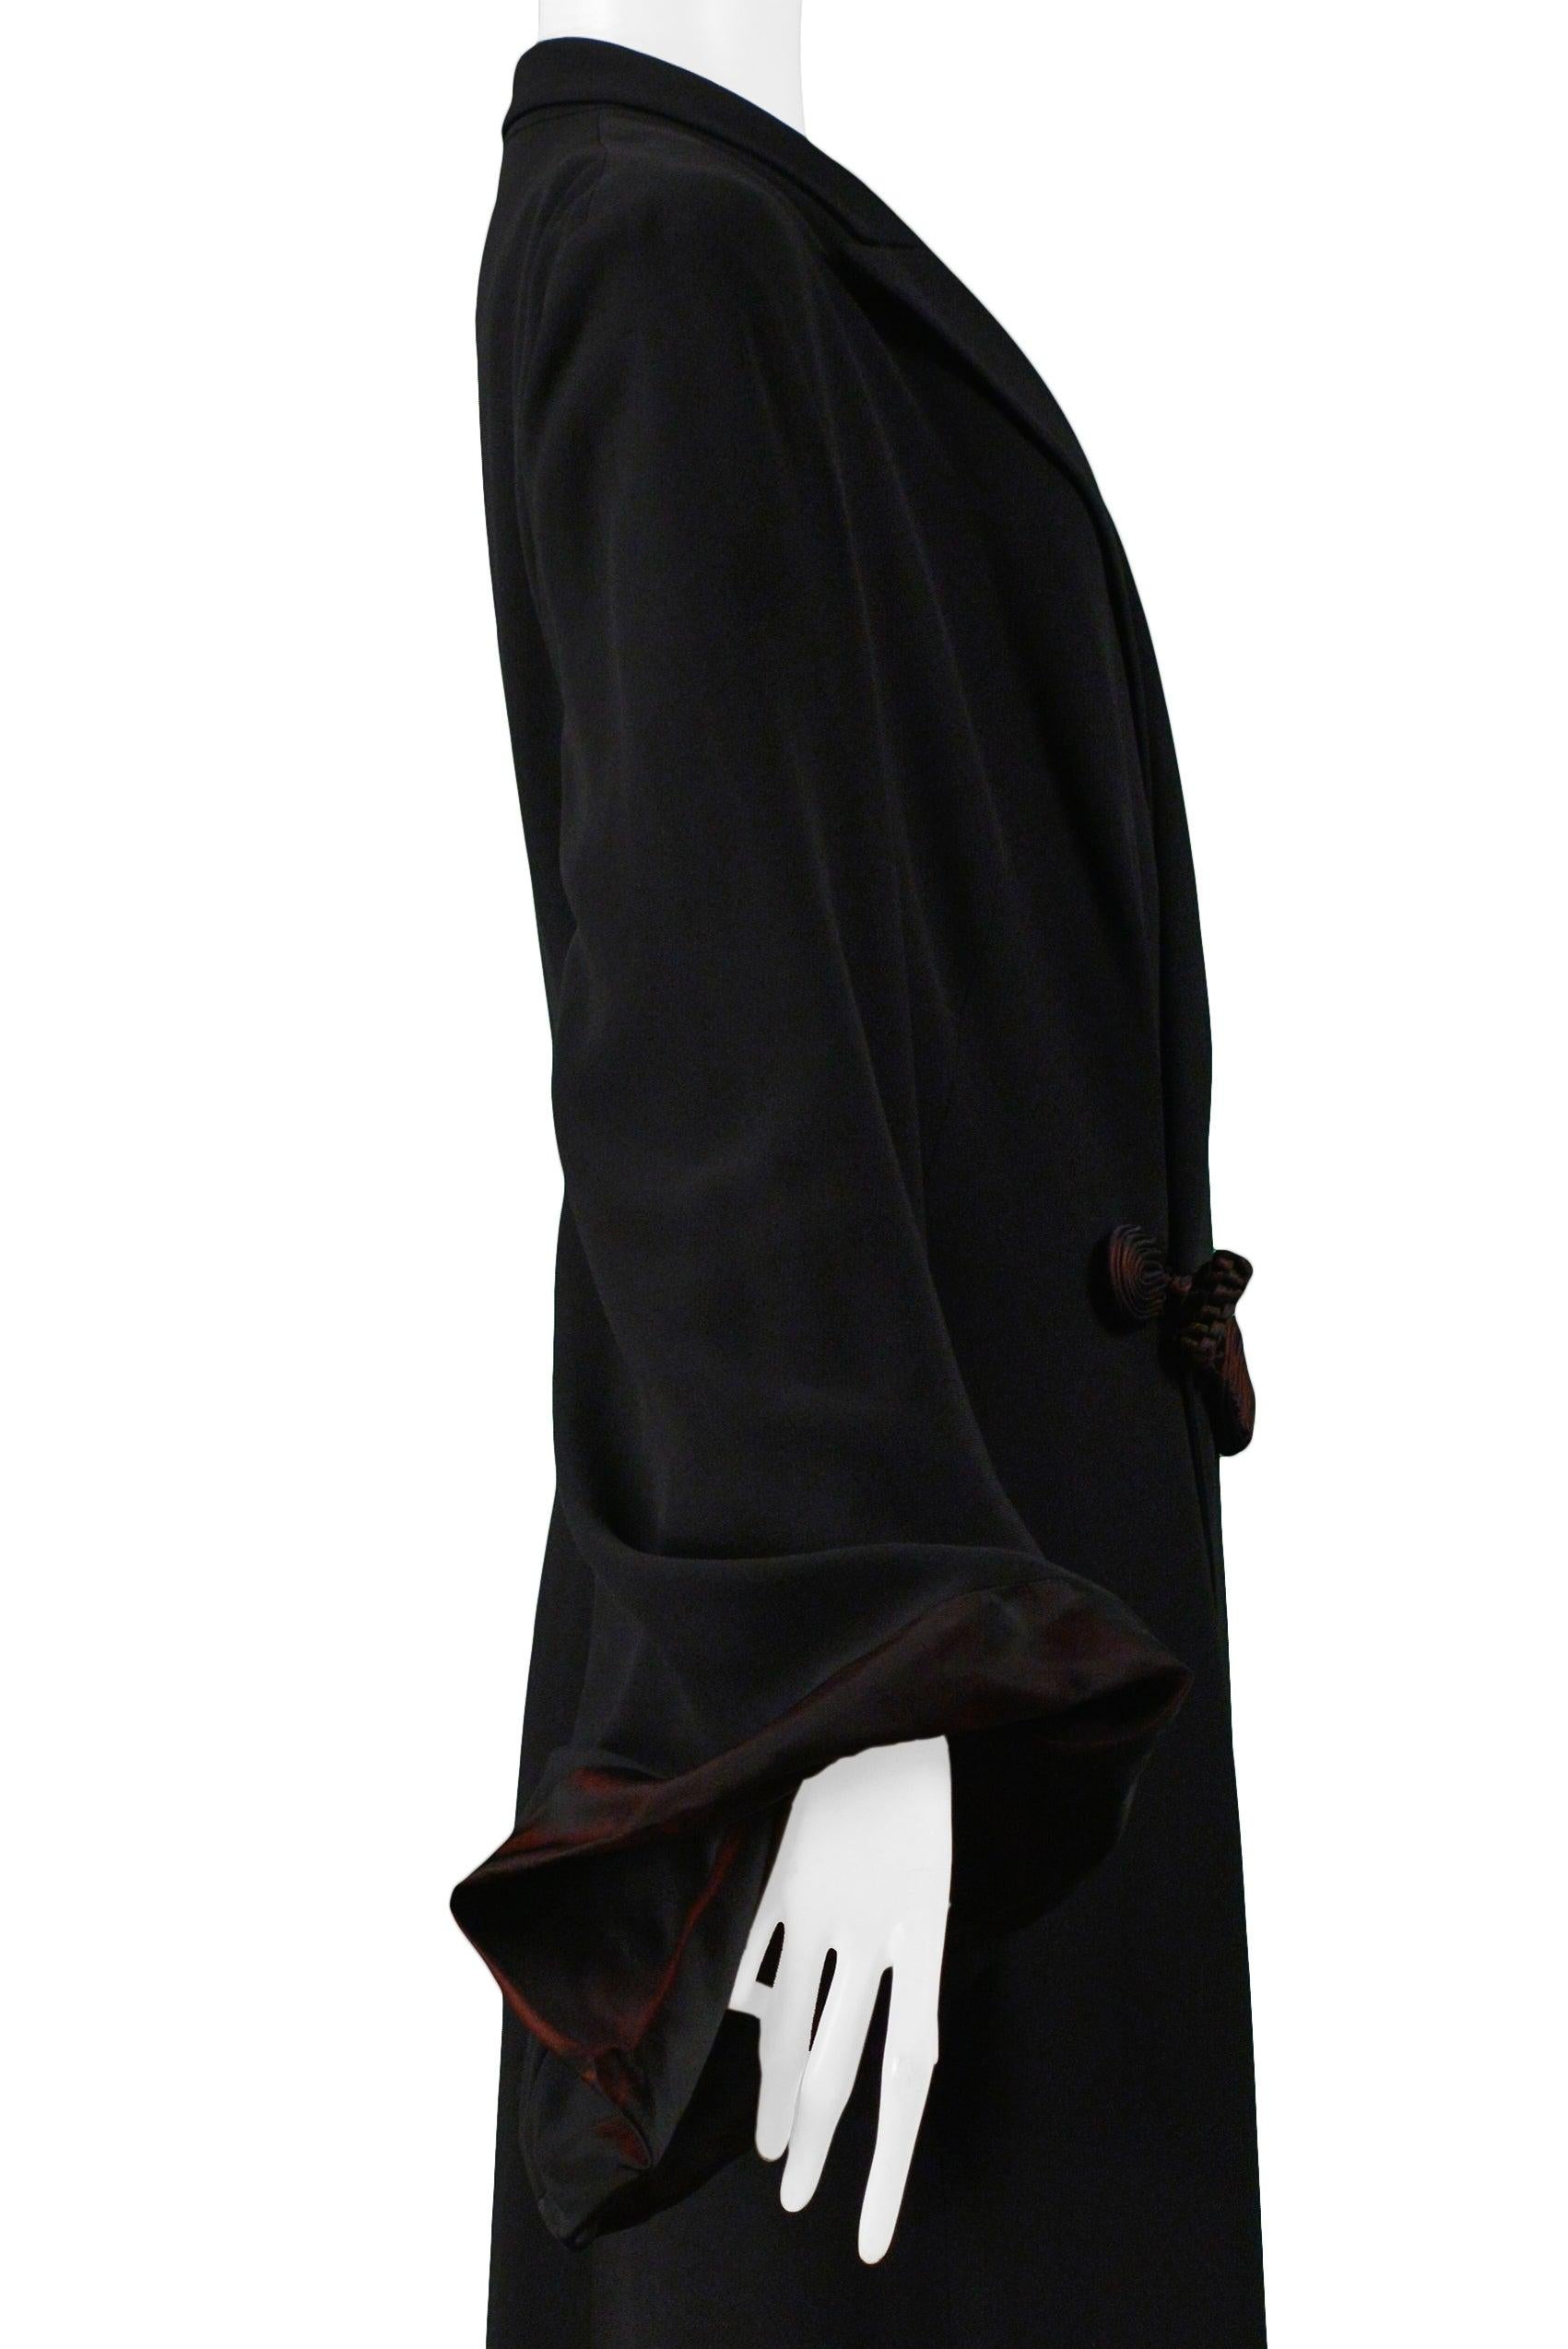 Women's Jean Paul Gaultier Black Kimono Coat With Burgundy Taffeta Bubble Sleeves